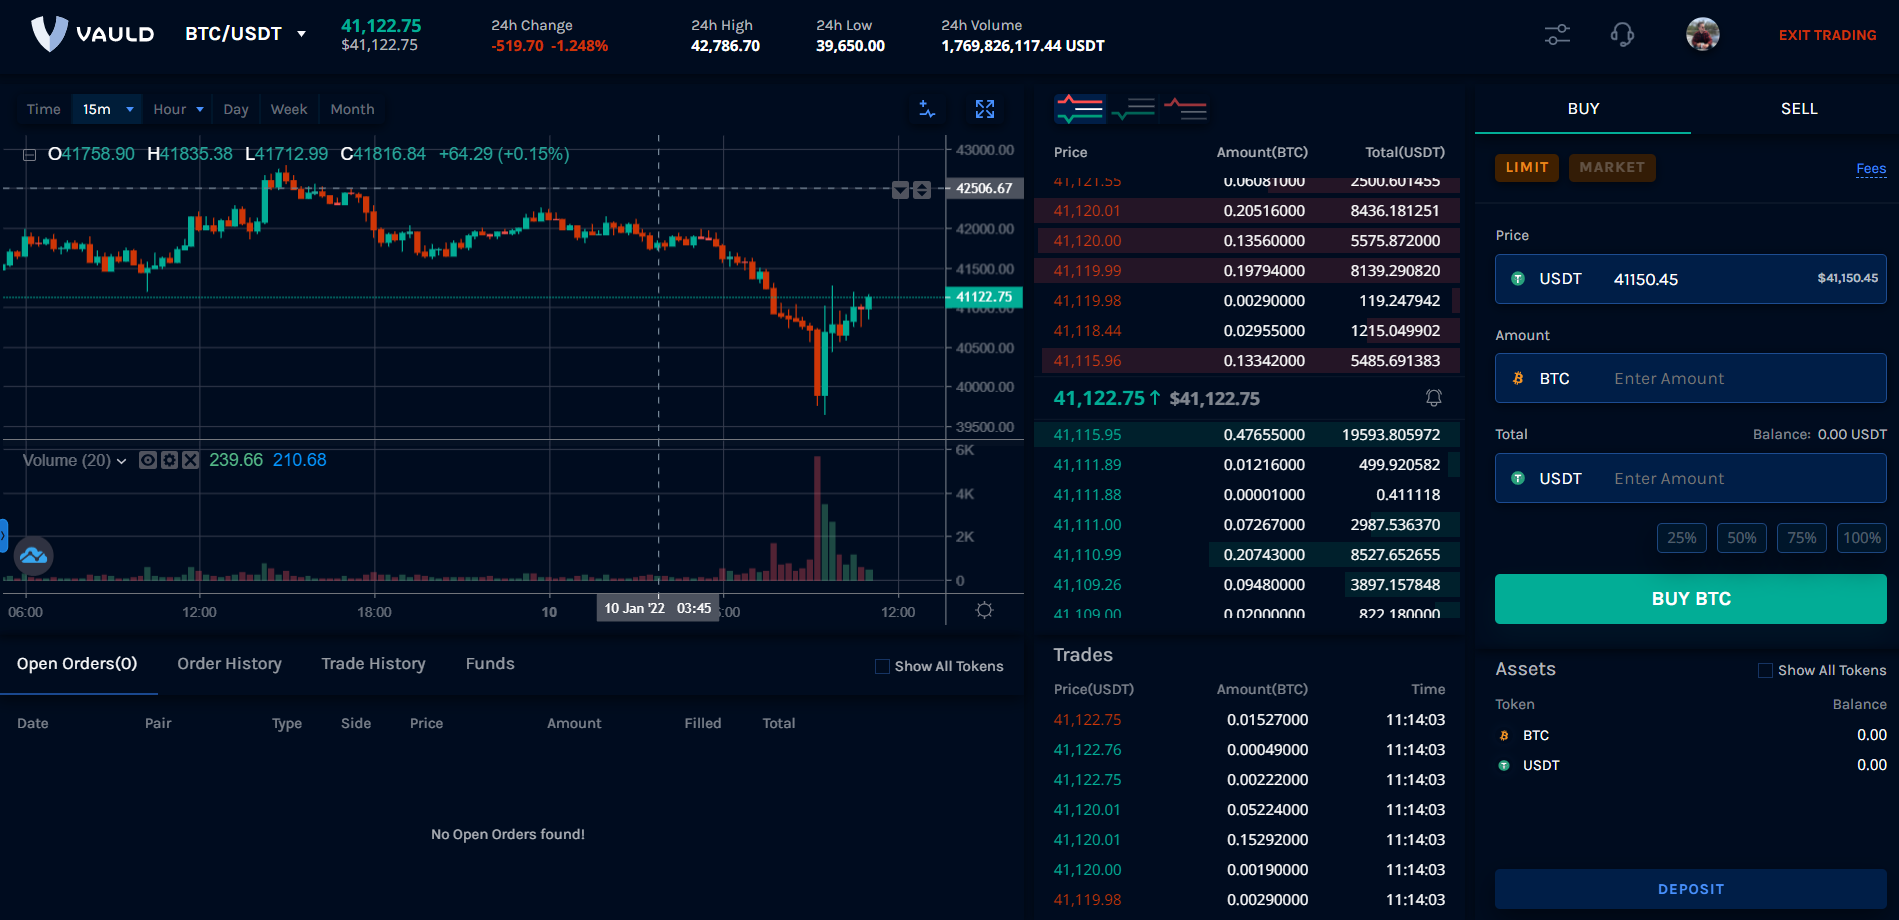 Screenshot of Vauld's Pro Trading platform